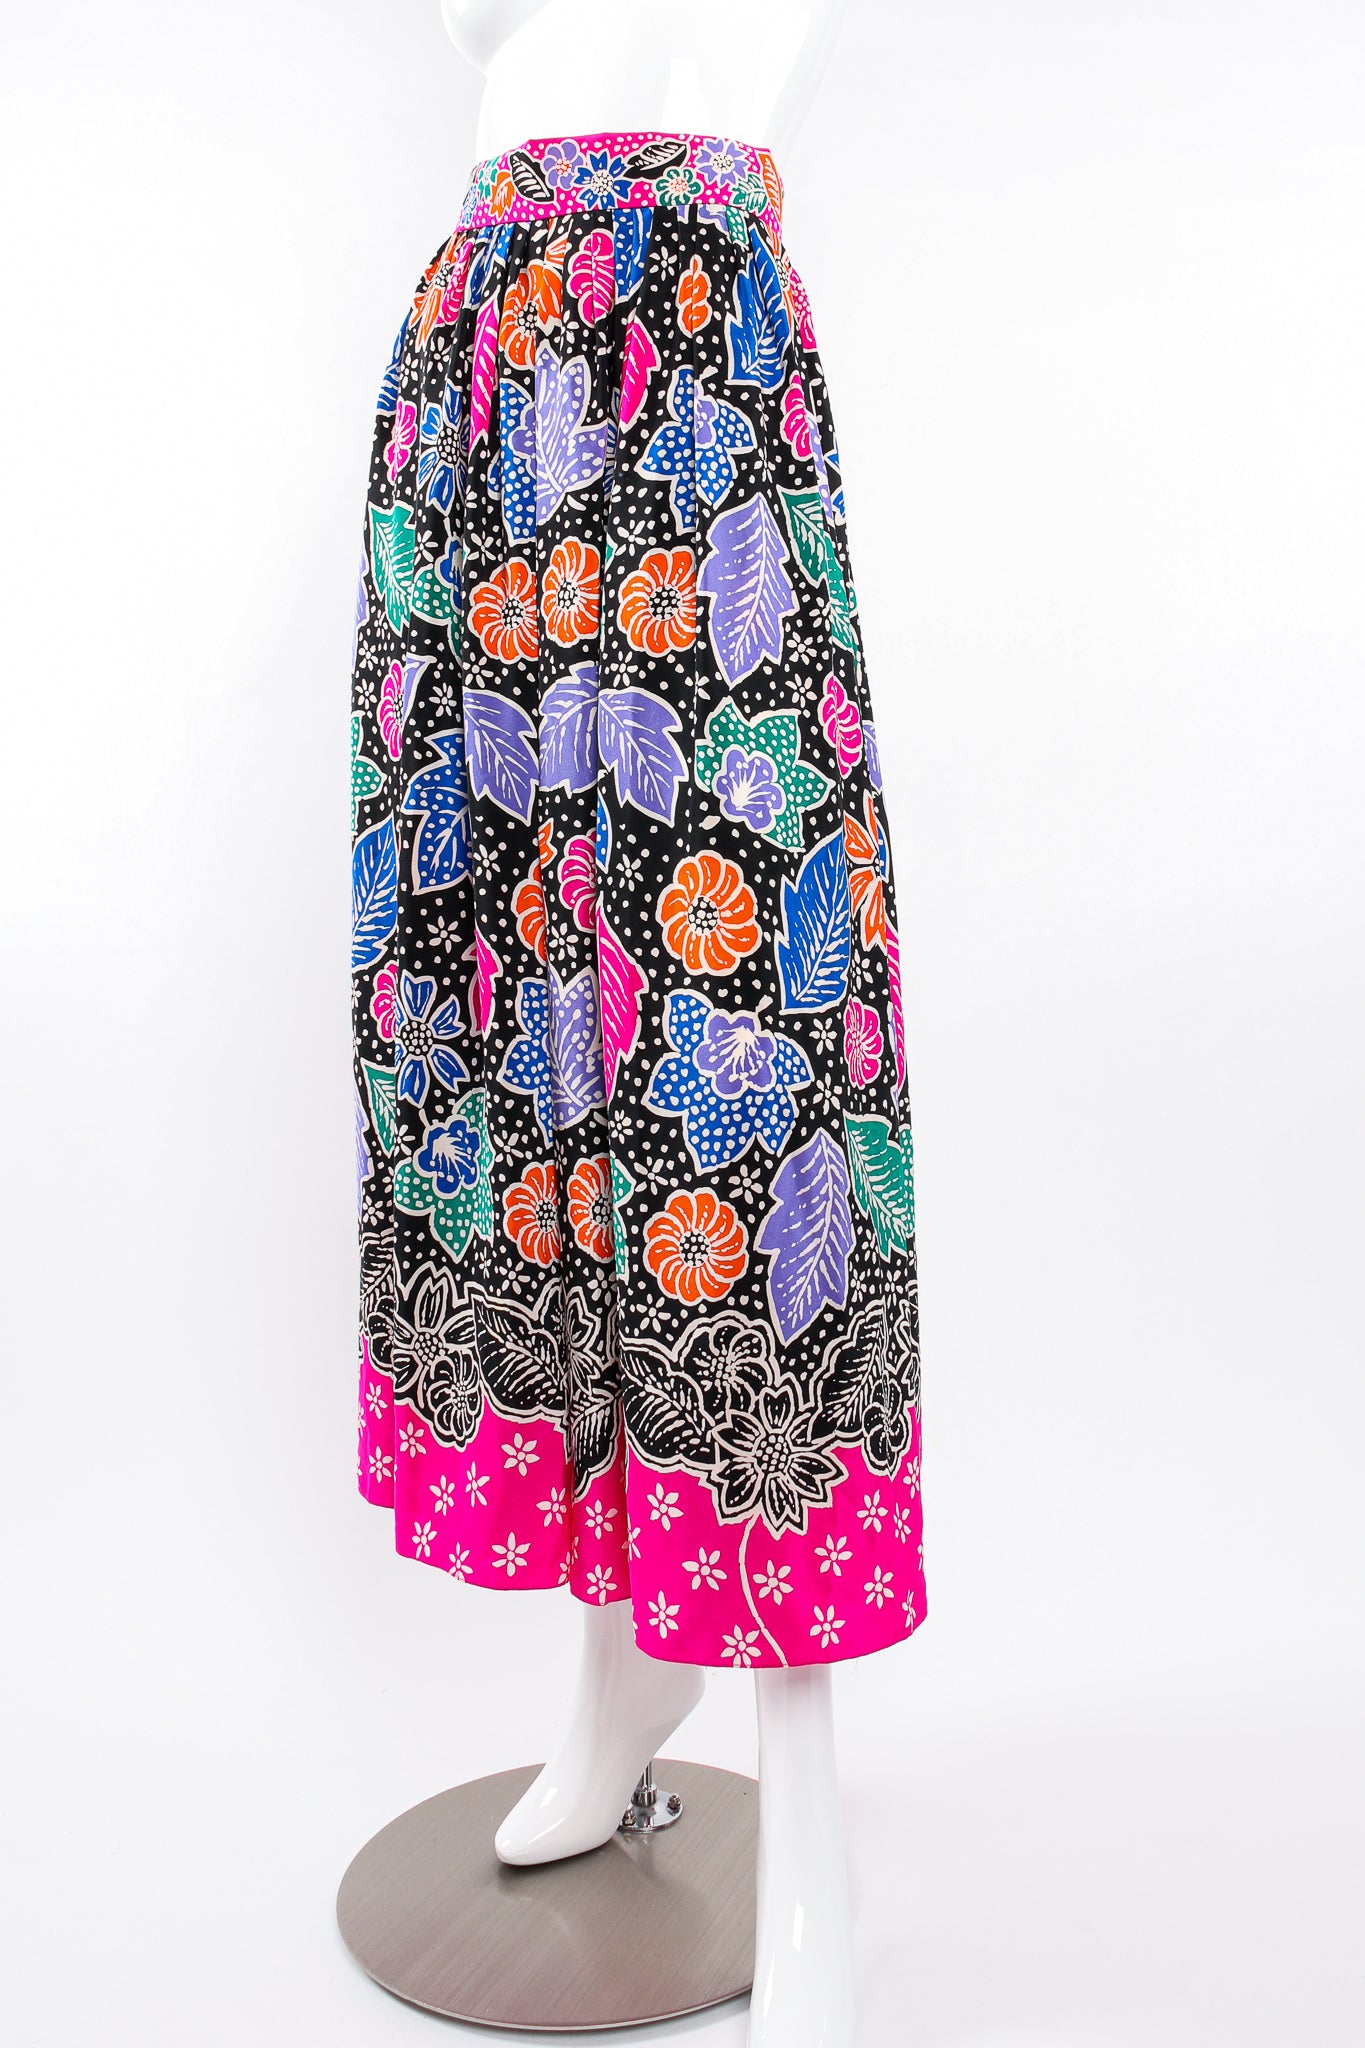 Vintage Miss O Oscar de la Renta Wax Floral Print Skirt on Mannequin front angle at Recess LA